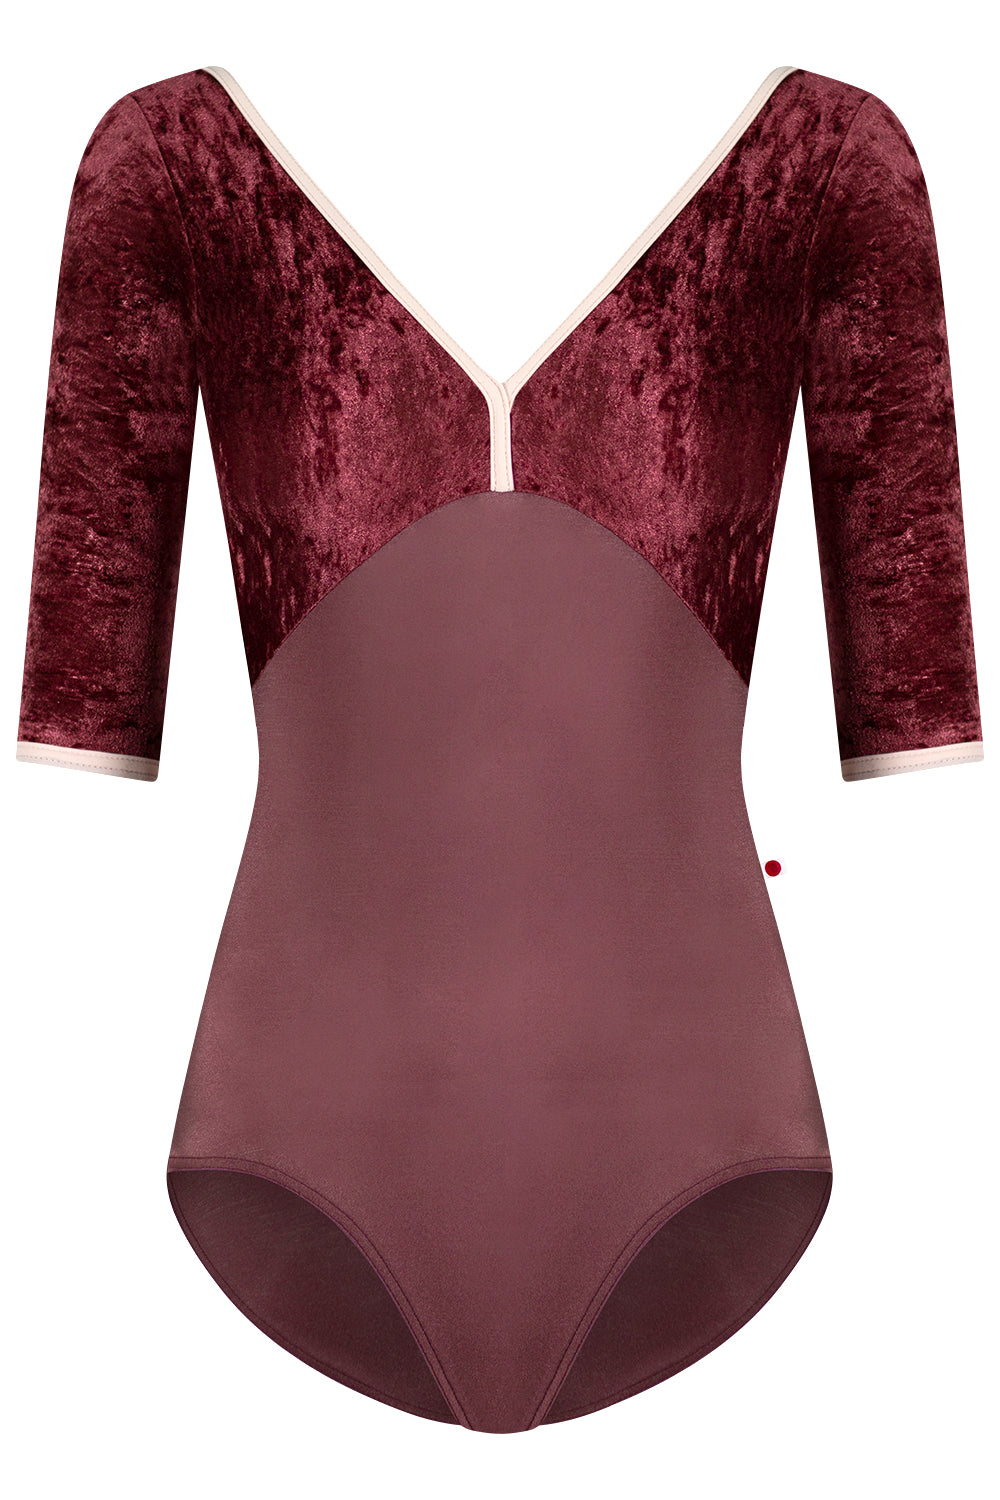 Alicia leotard in N-Phoenix body color with CV-Garnet top color & Half Sleeves and CV-Misty Rose trim color